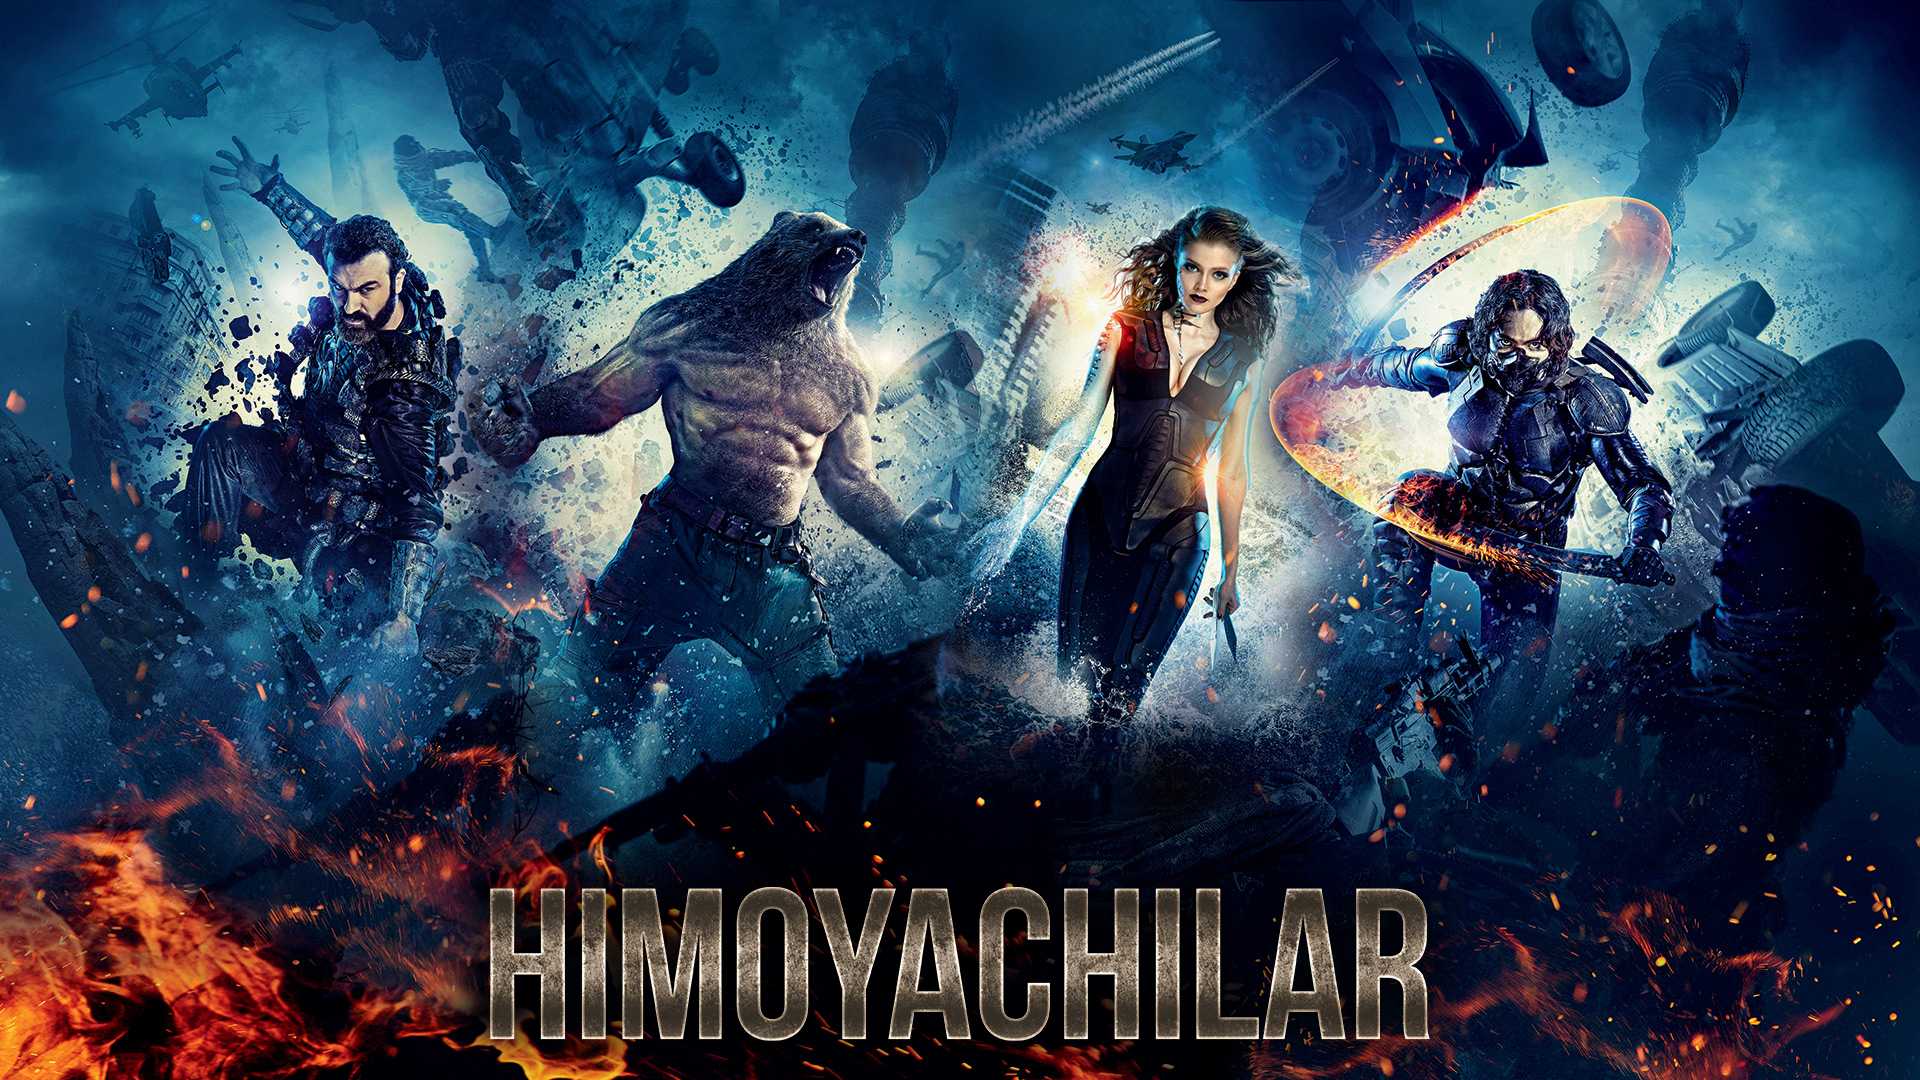 Himoyachilar